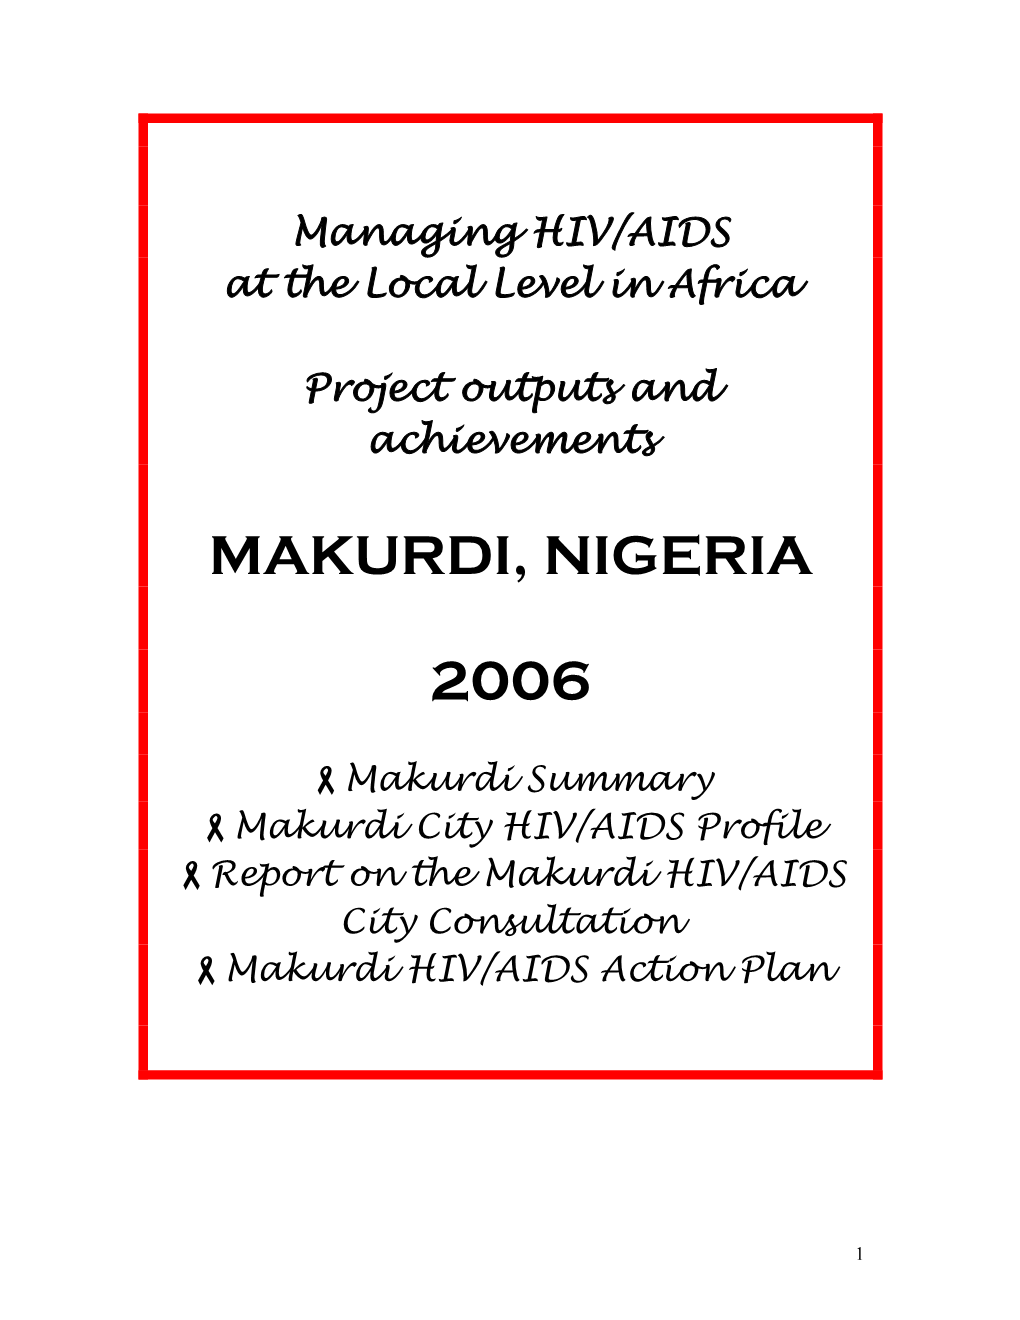 Makurdi, Nigeria 2006